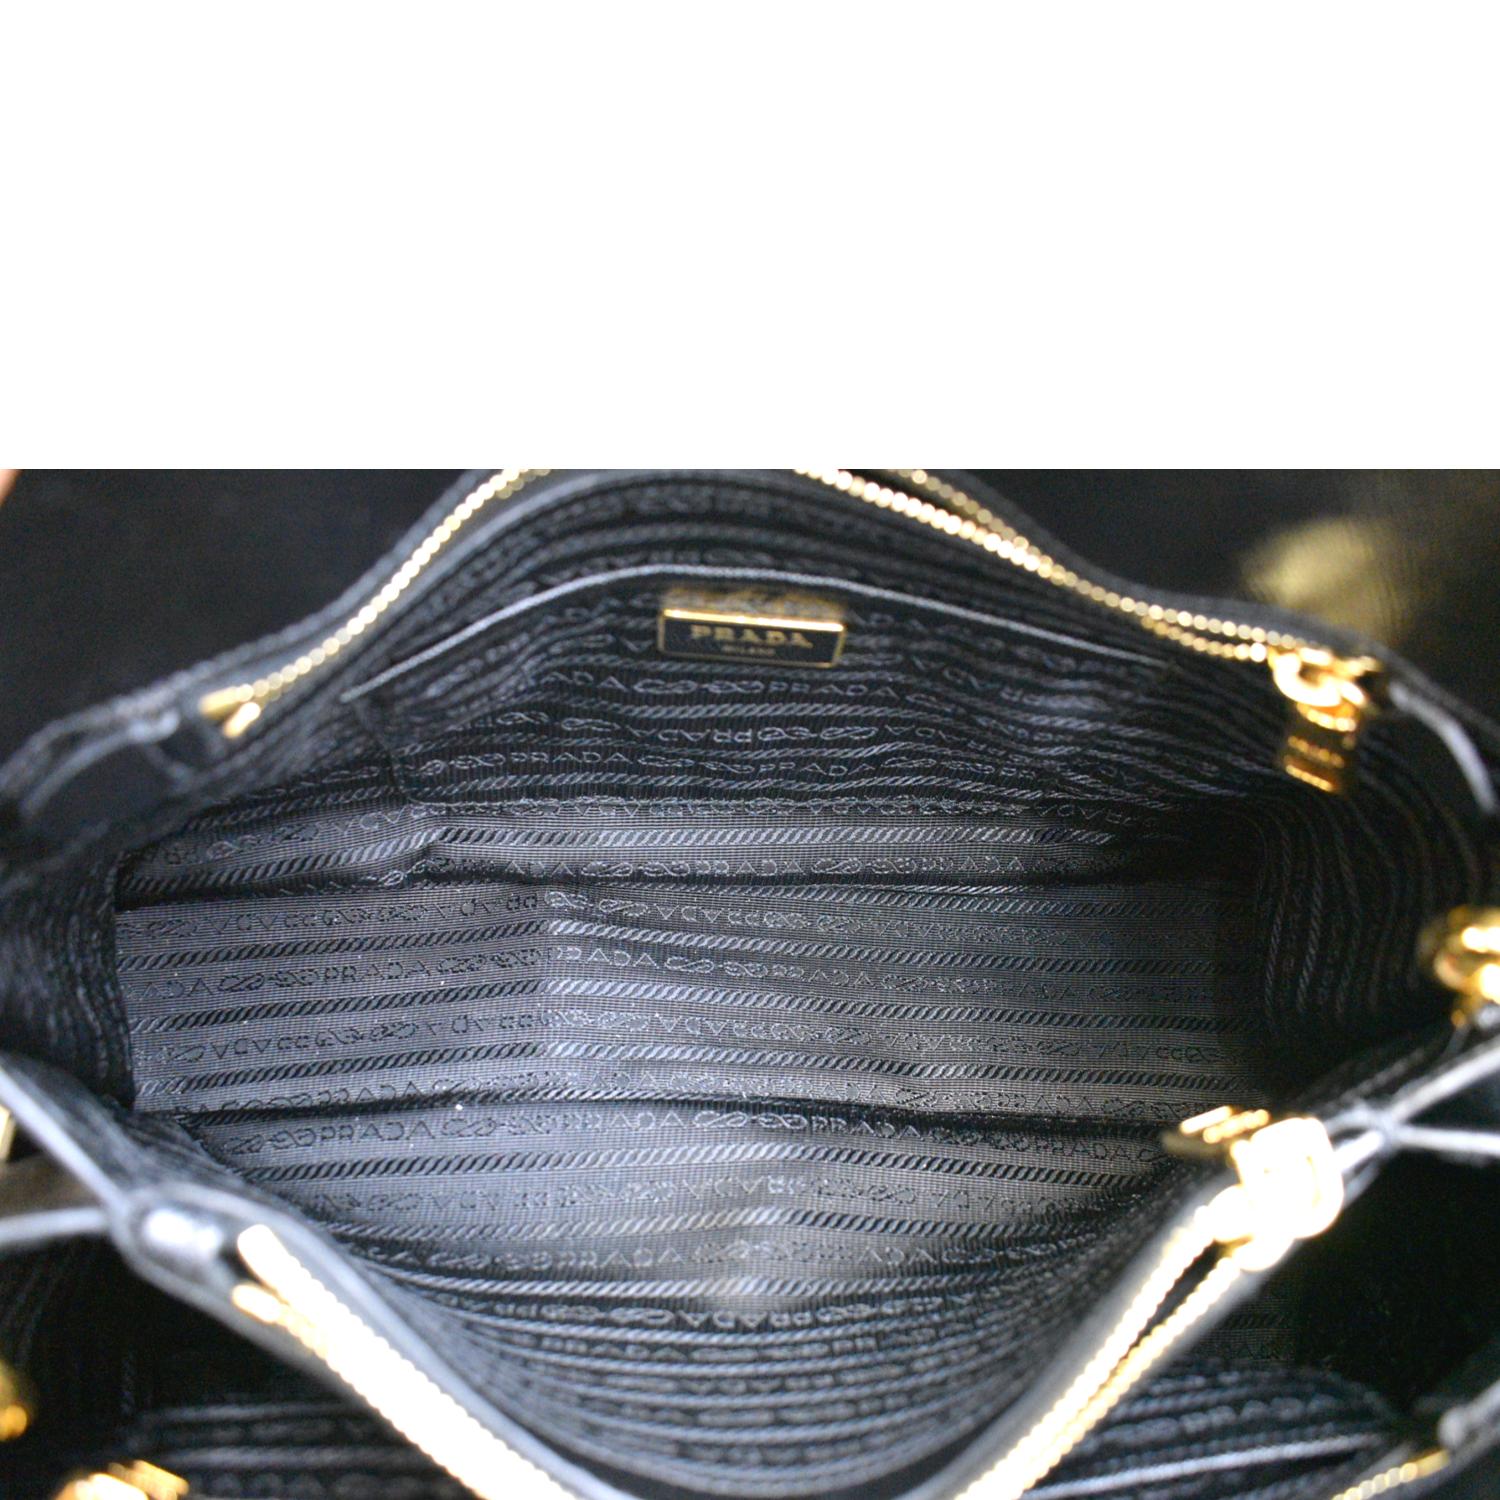 Prada Promenade Bag Saffiano Leather Medium at 1stDibs